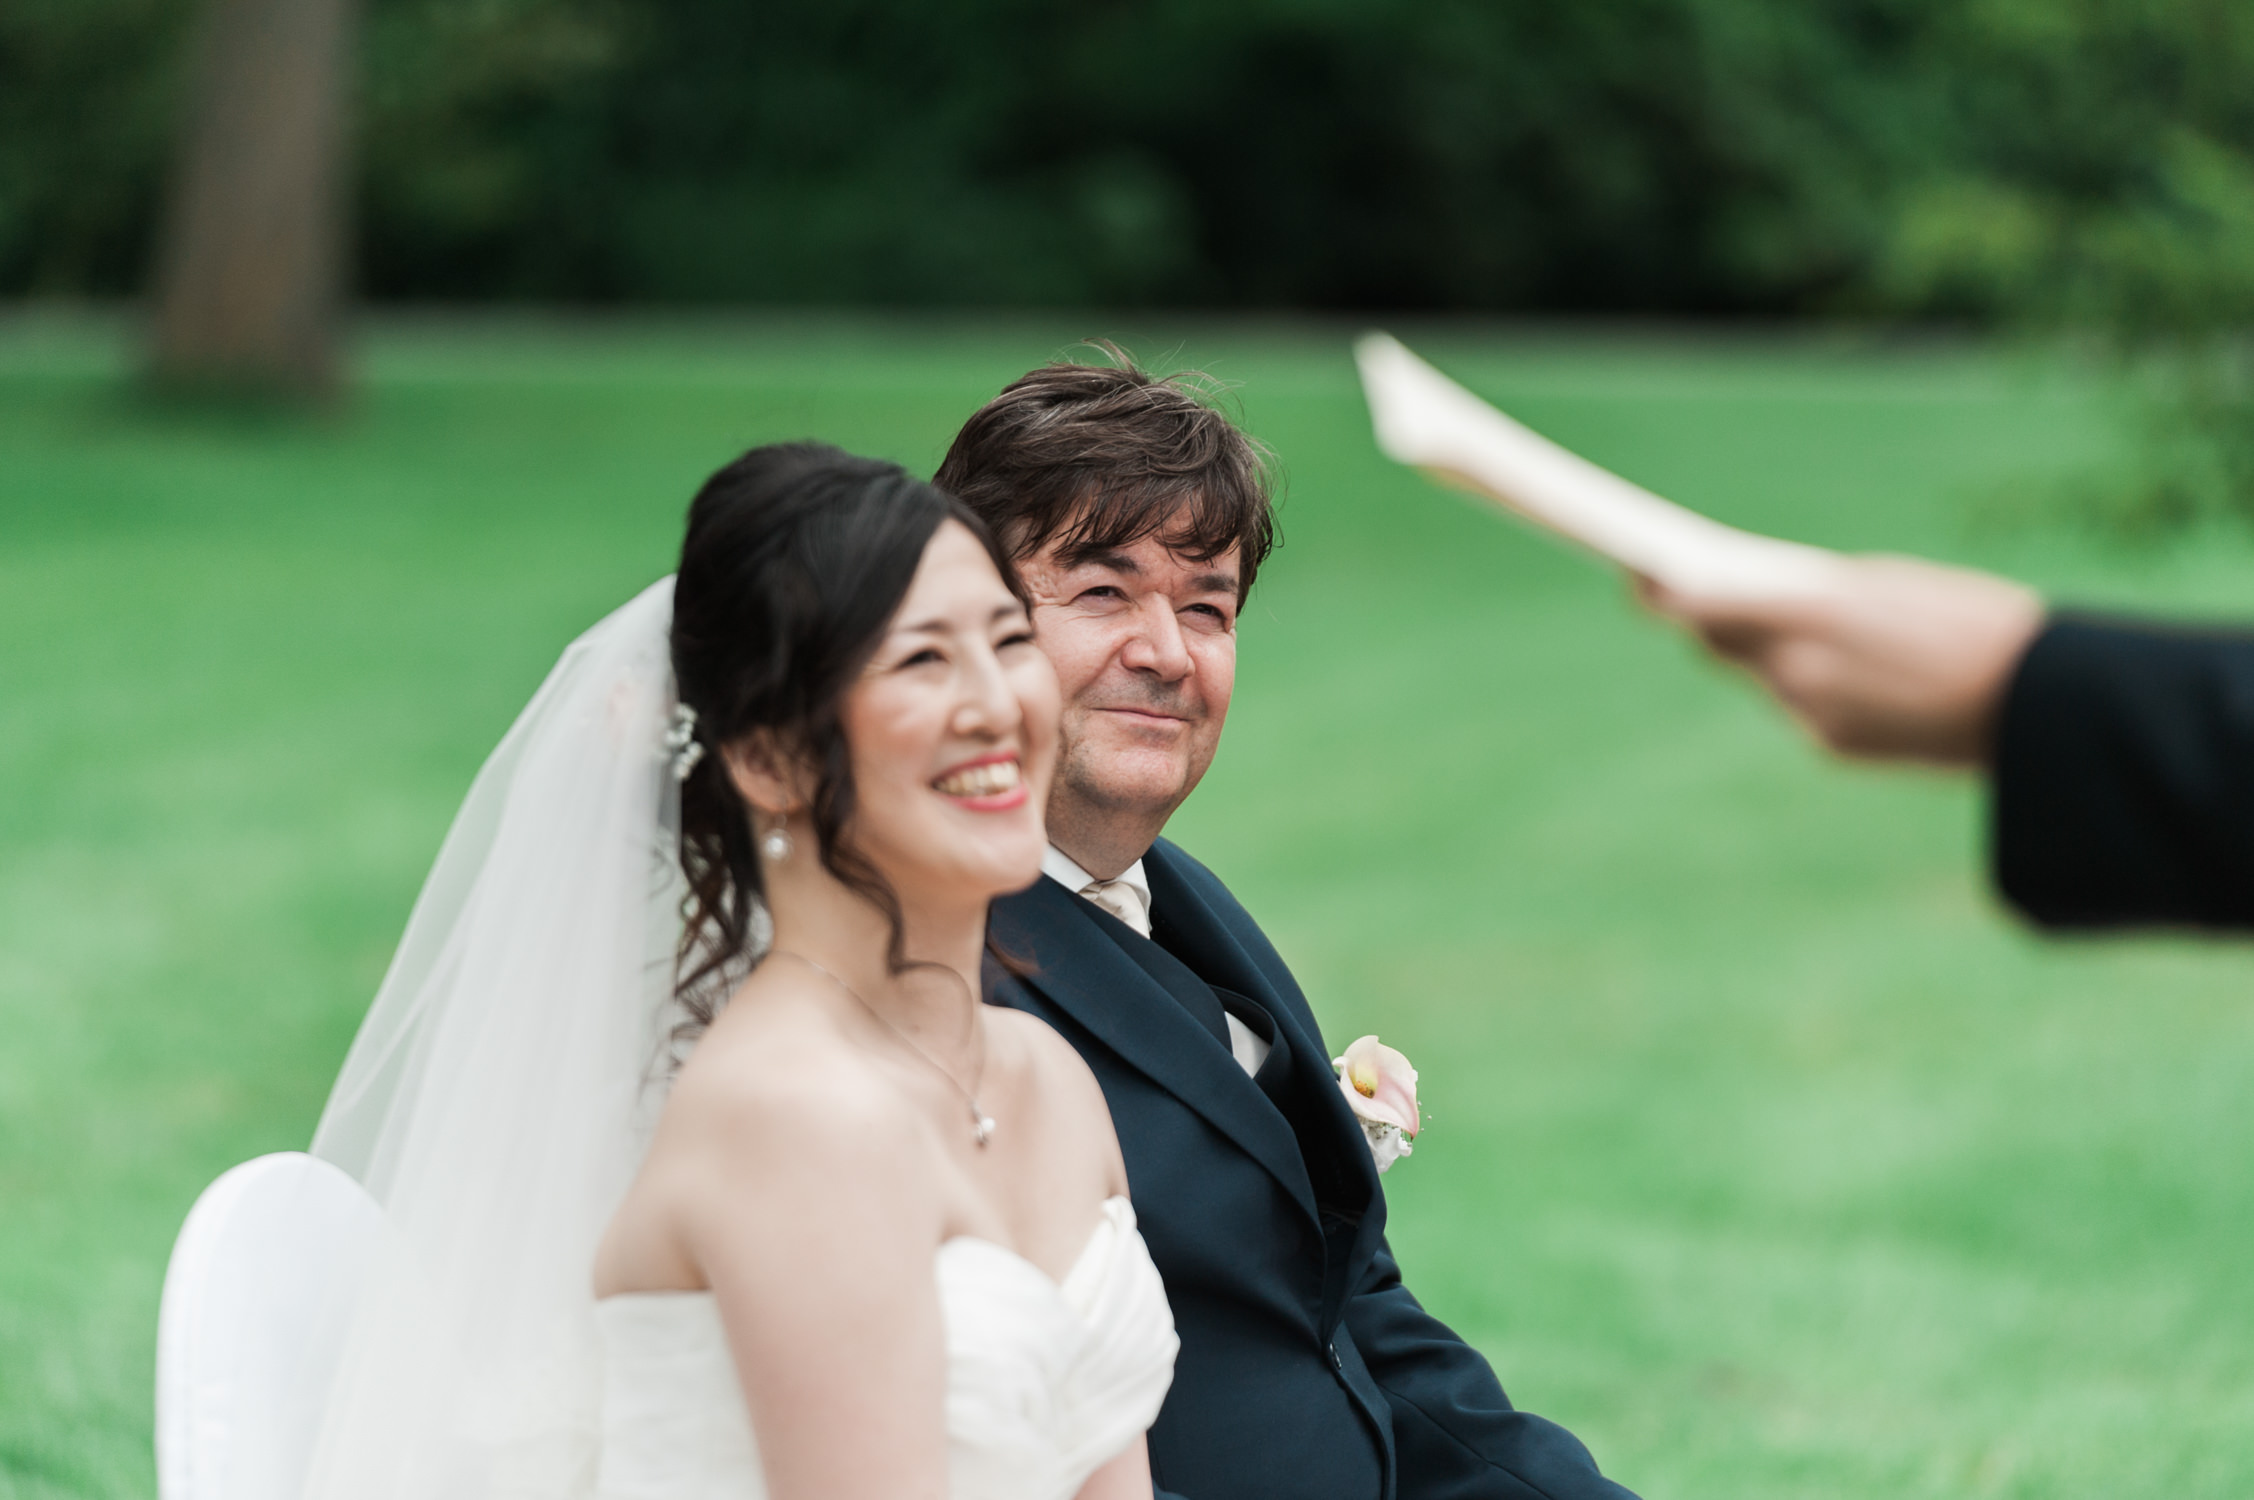 Wedding photographer for an expat couple